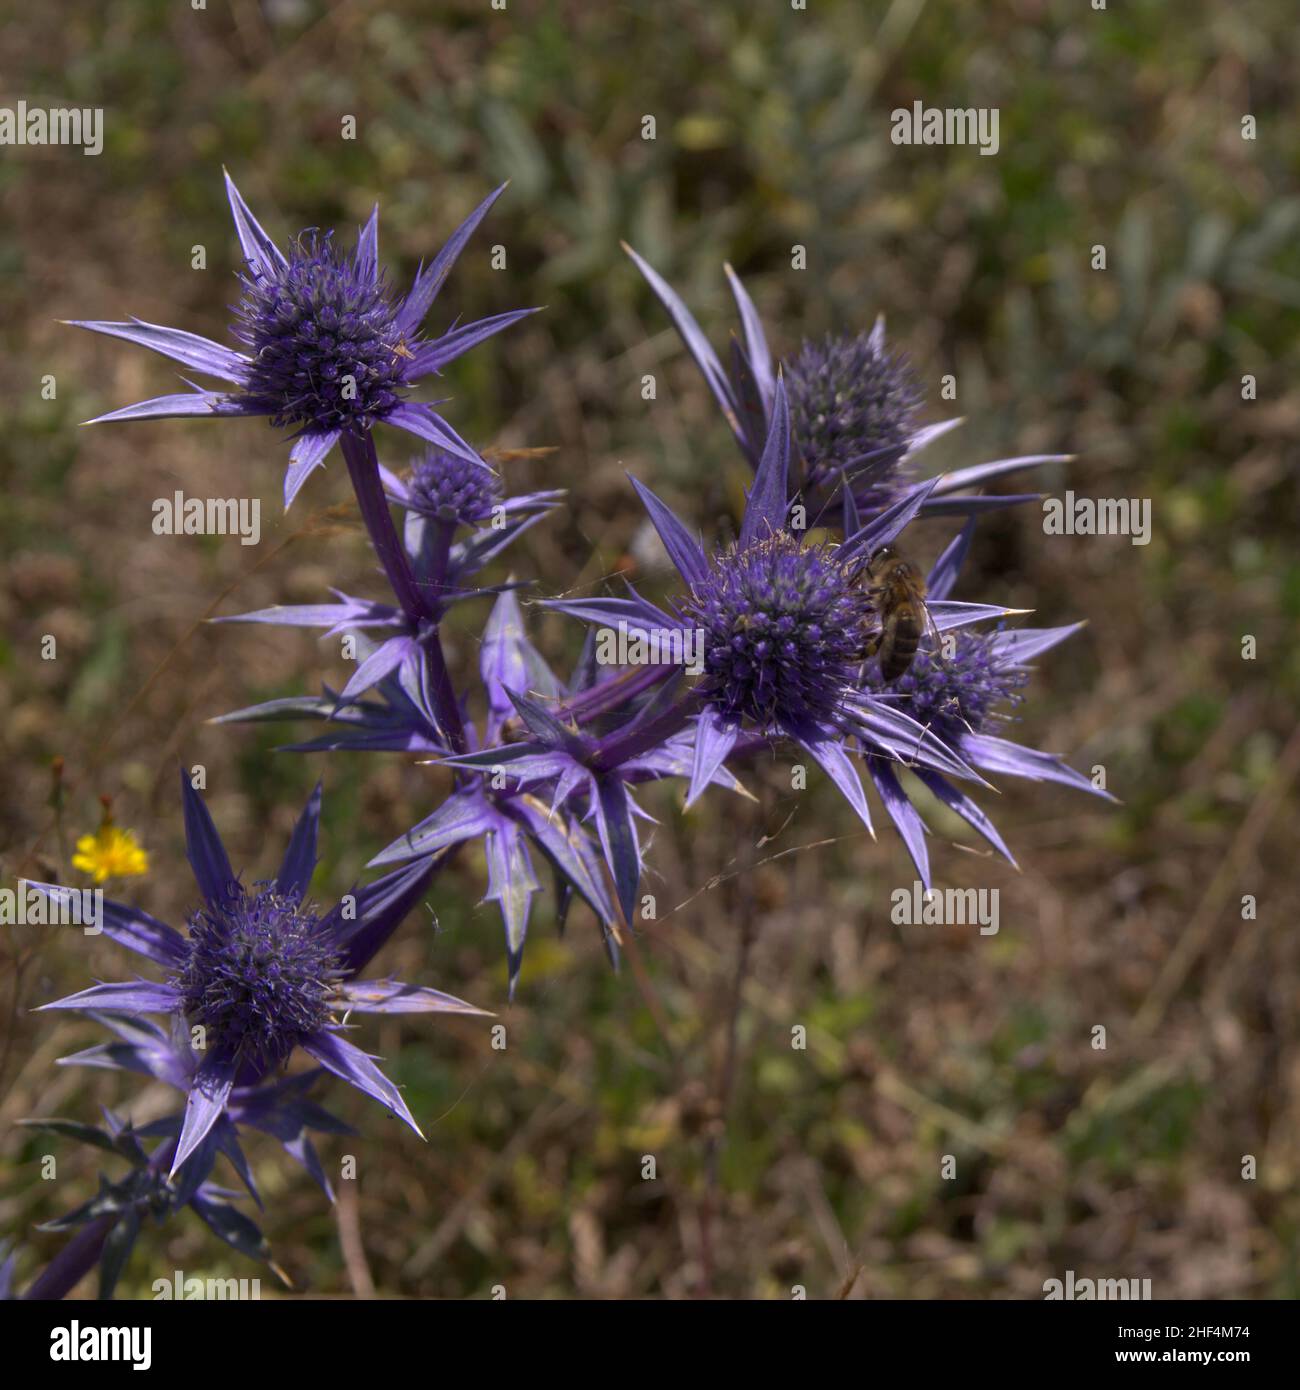 flora of Cantabria - blue flower heads of Eryngium bourgatii, Meditarranean sea holly Stock Photo